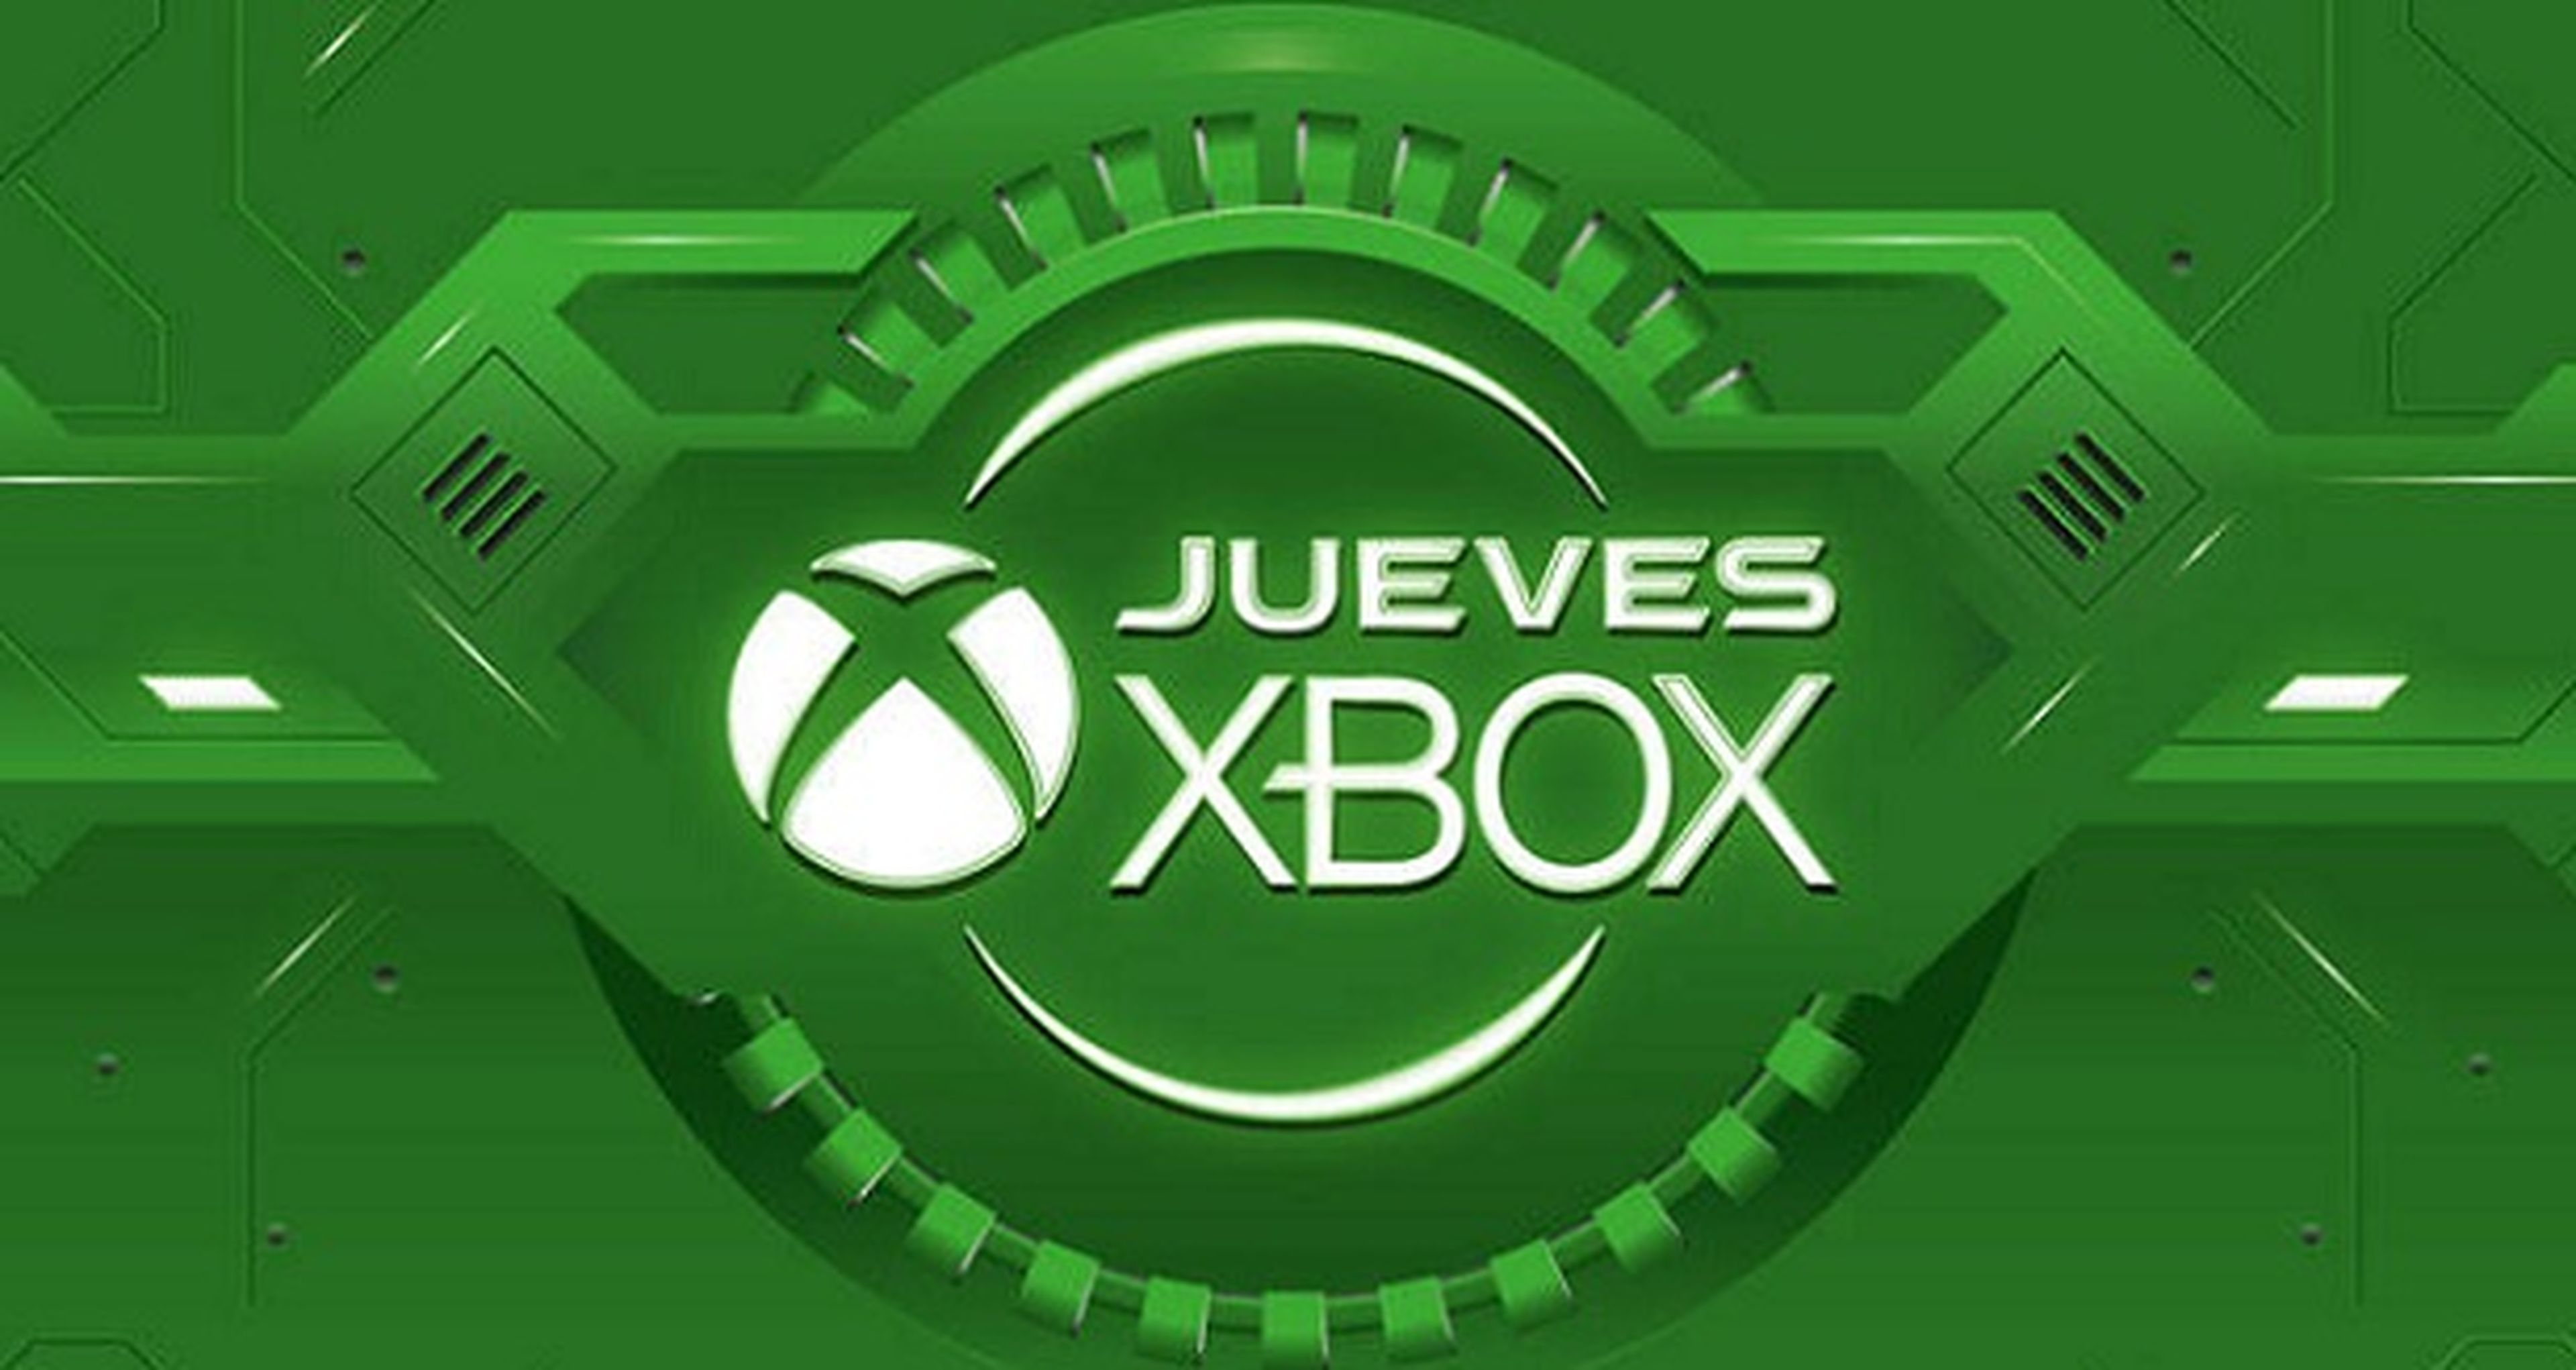 Jueves Xbox en GAME: sexta semana de ofertas